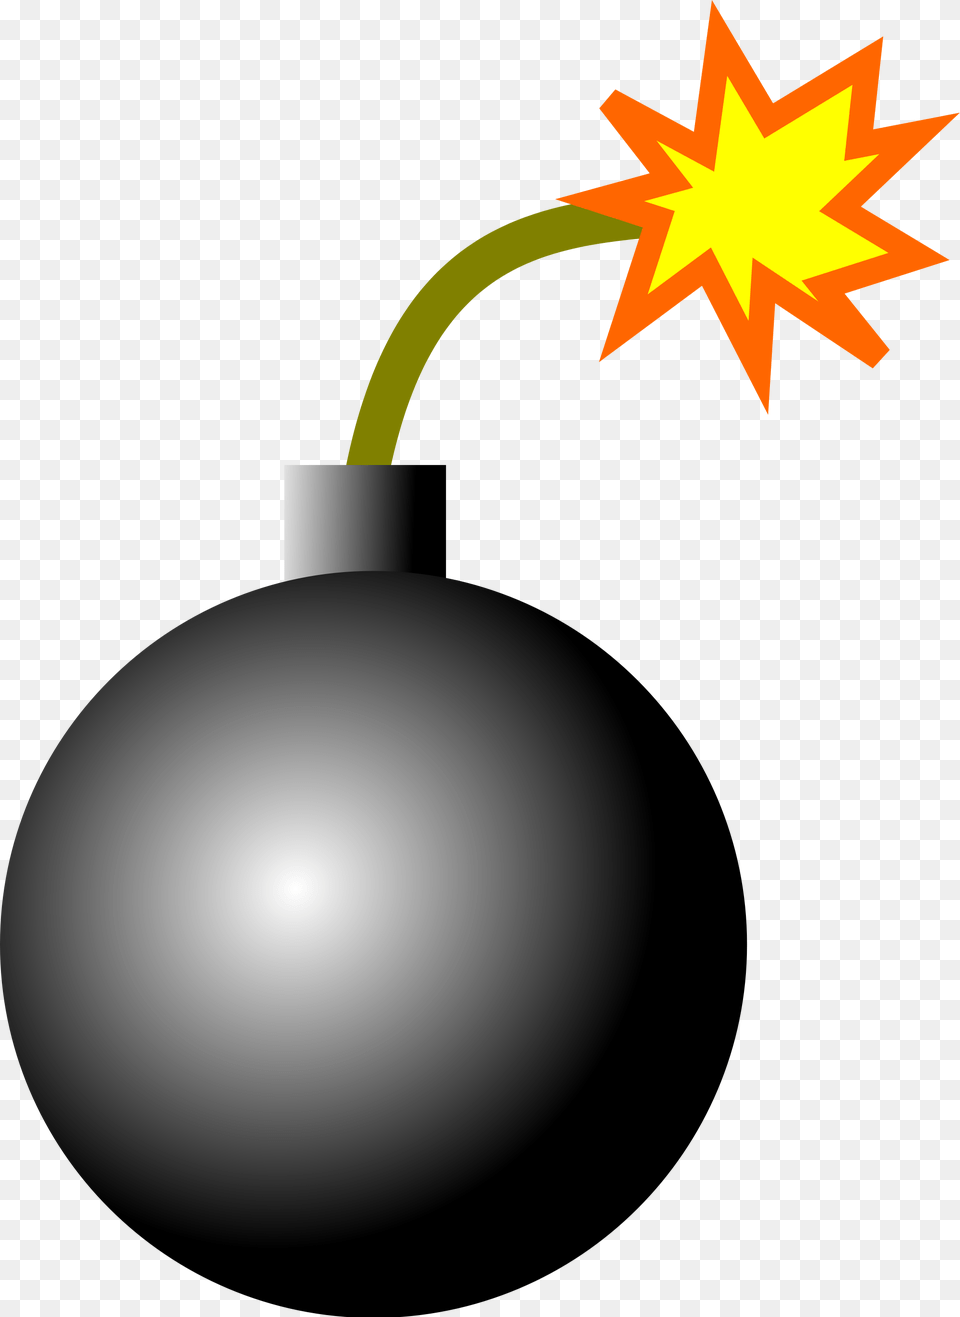 Bomb, Ammunition, Weapon, Lighting Png